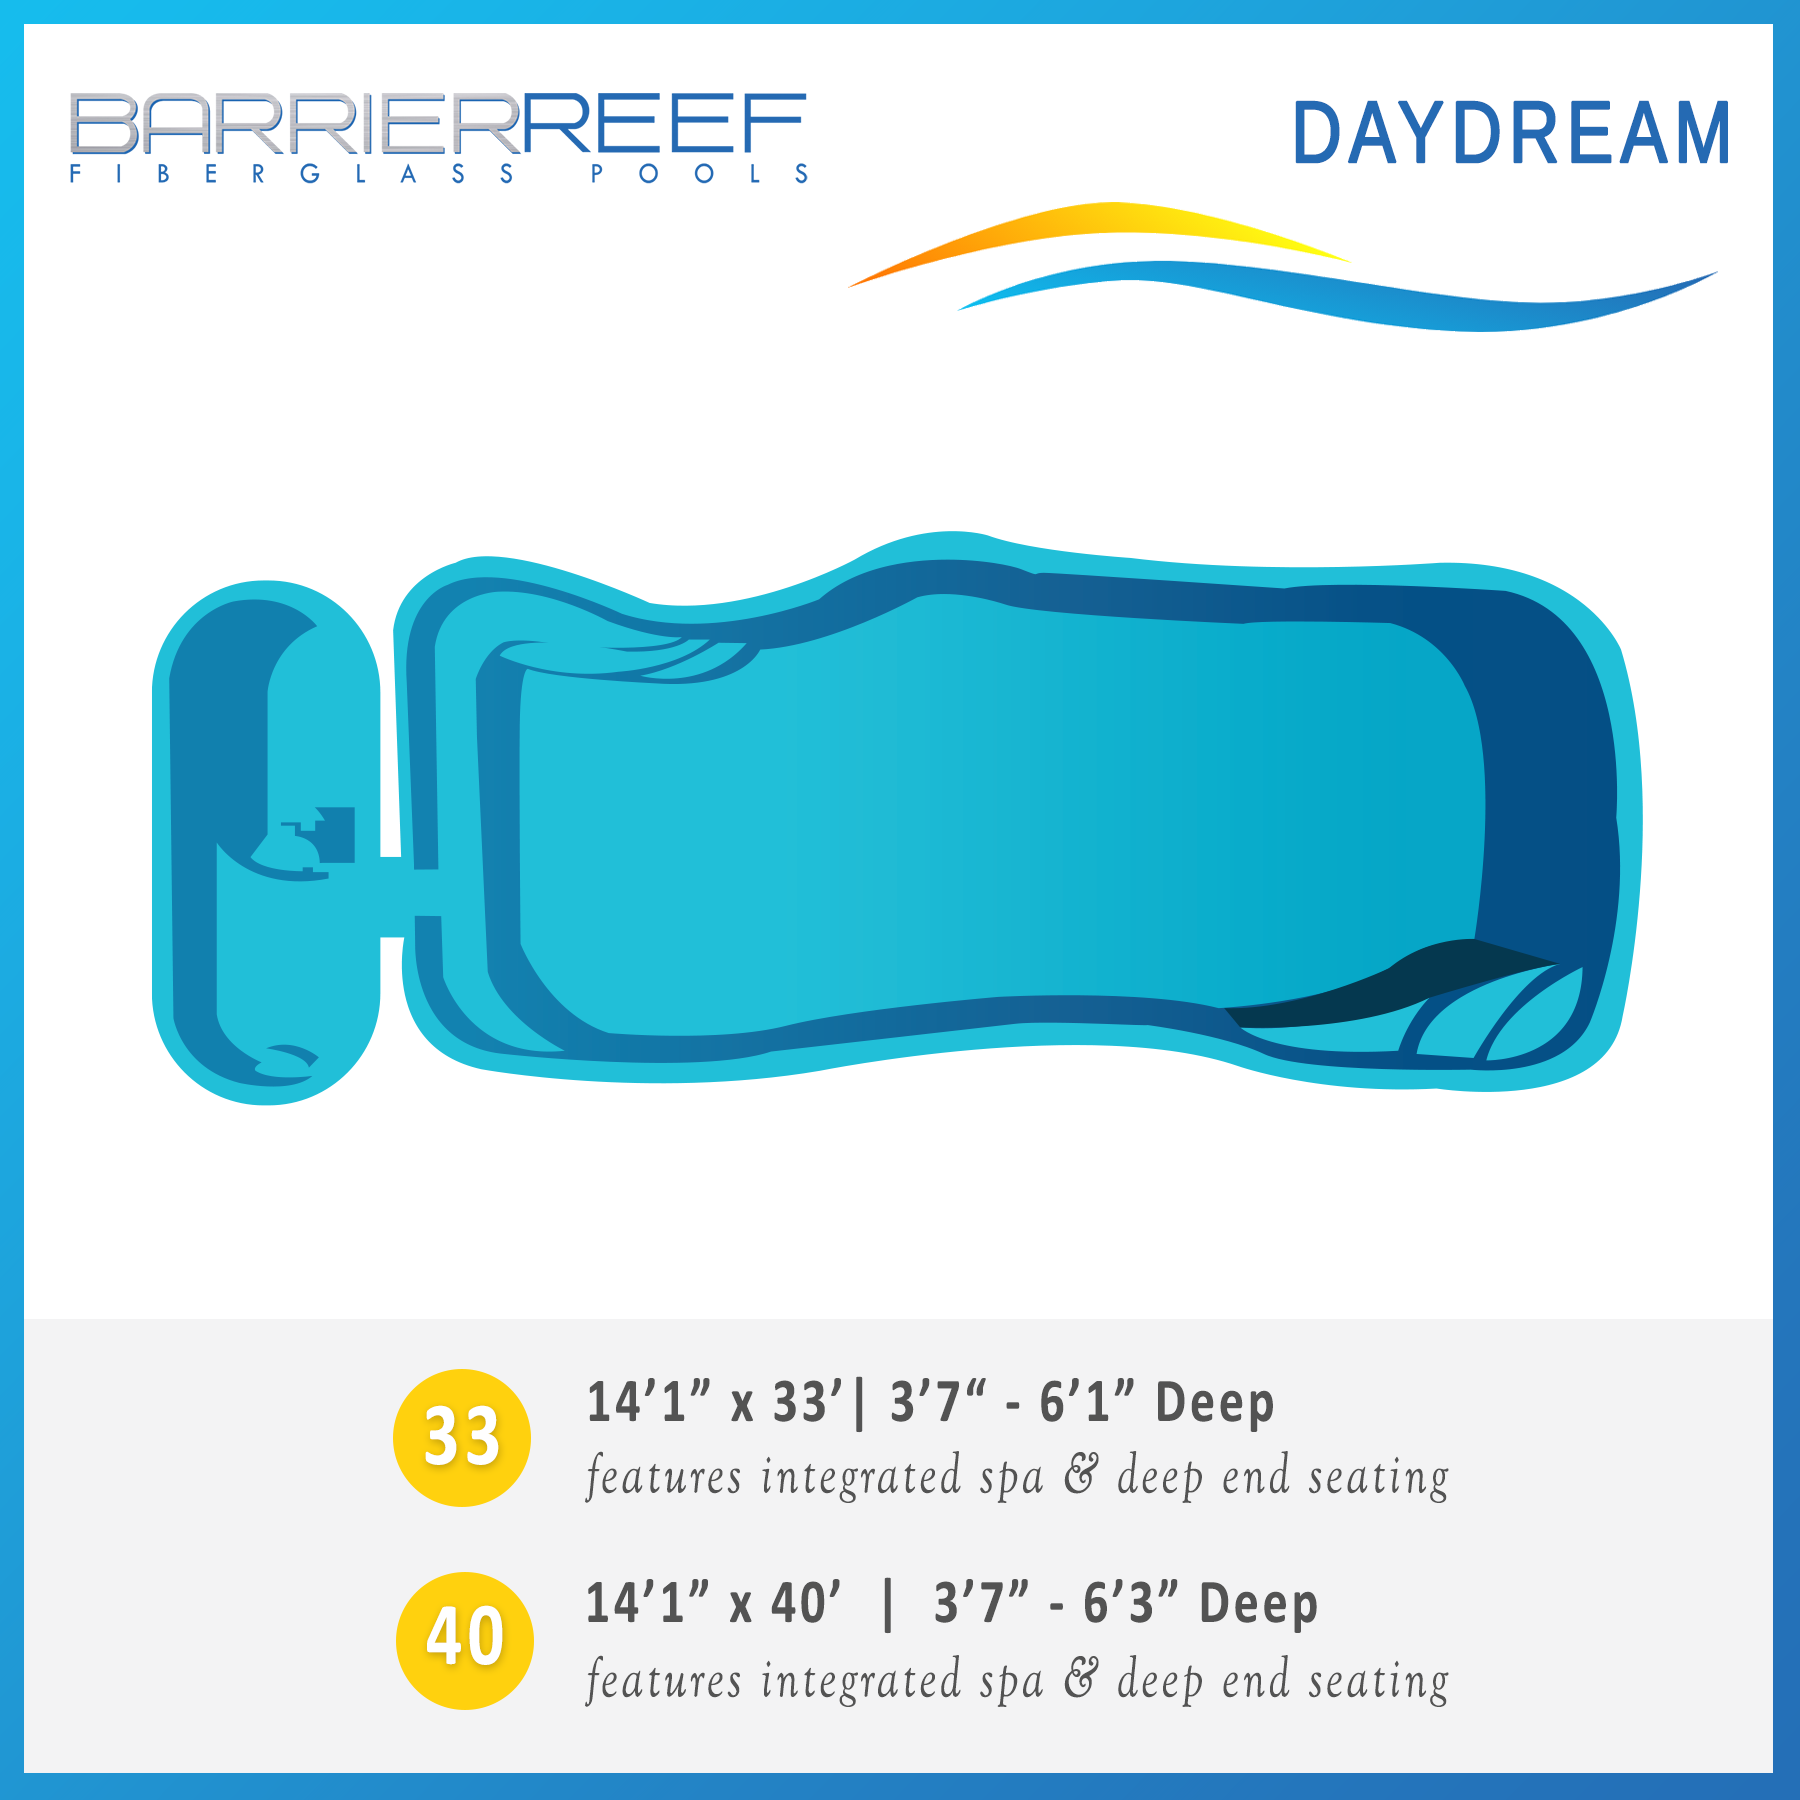 Daydream Barrier Reef Fiberglass Pool